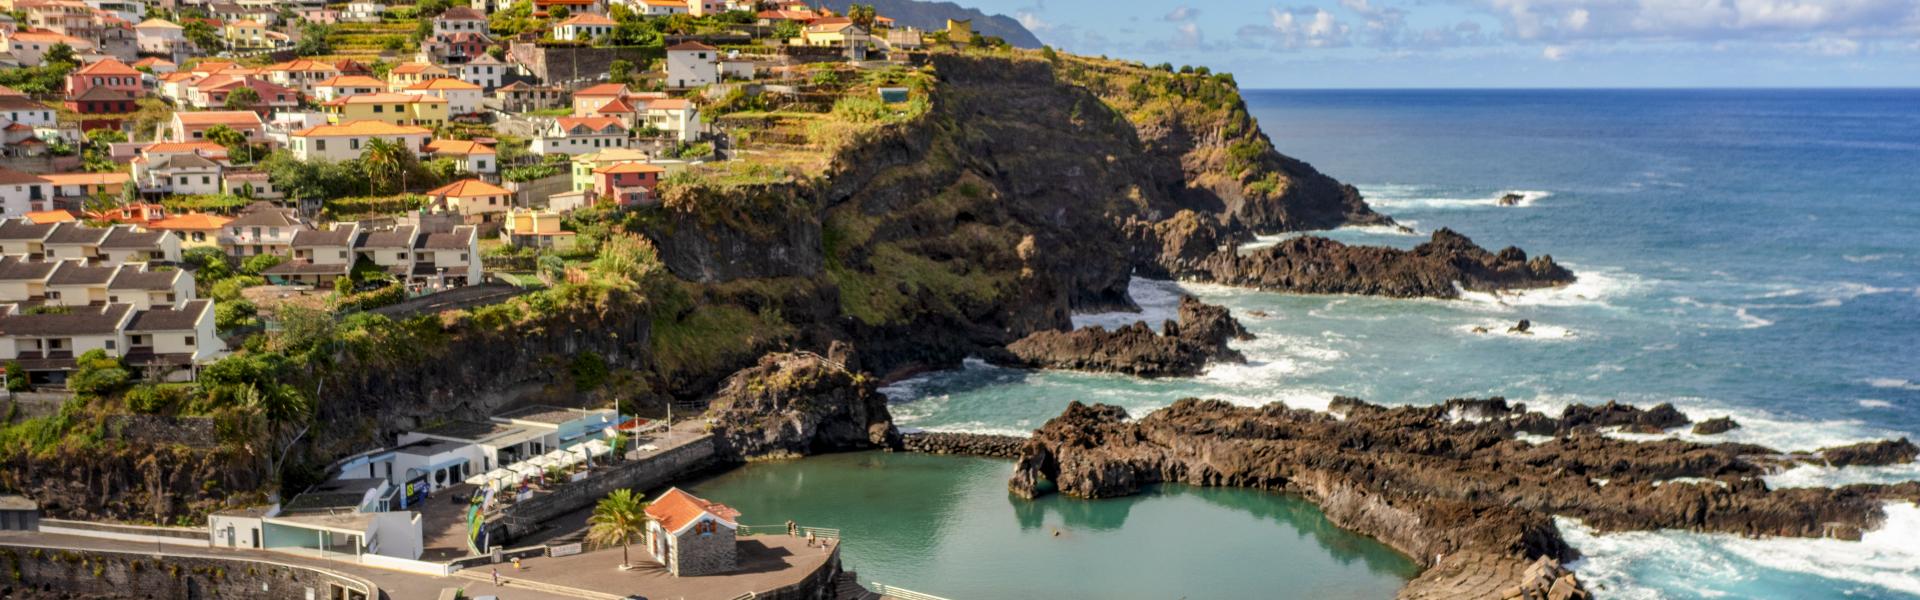 Madeira Scenic View